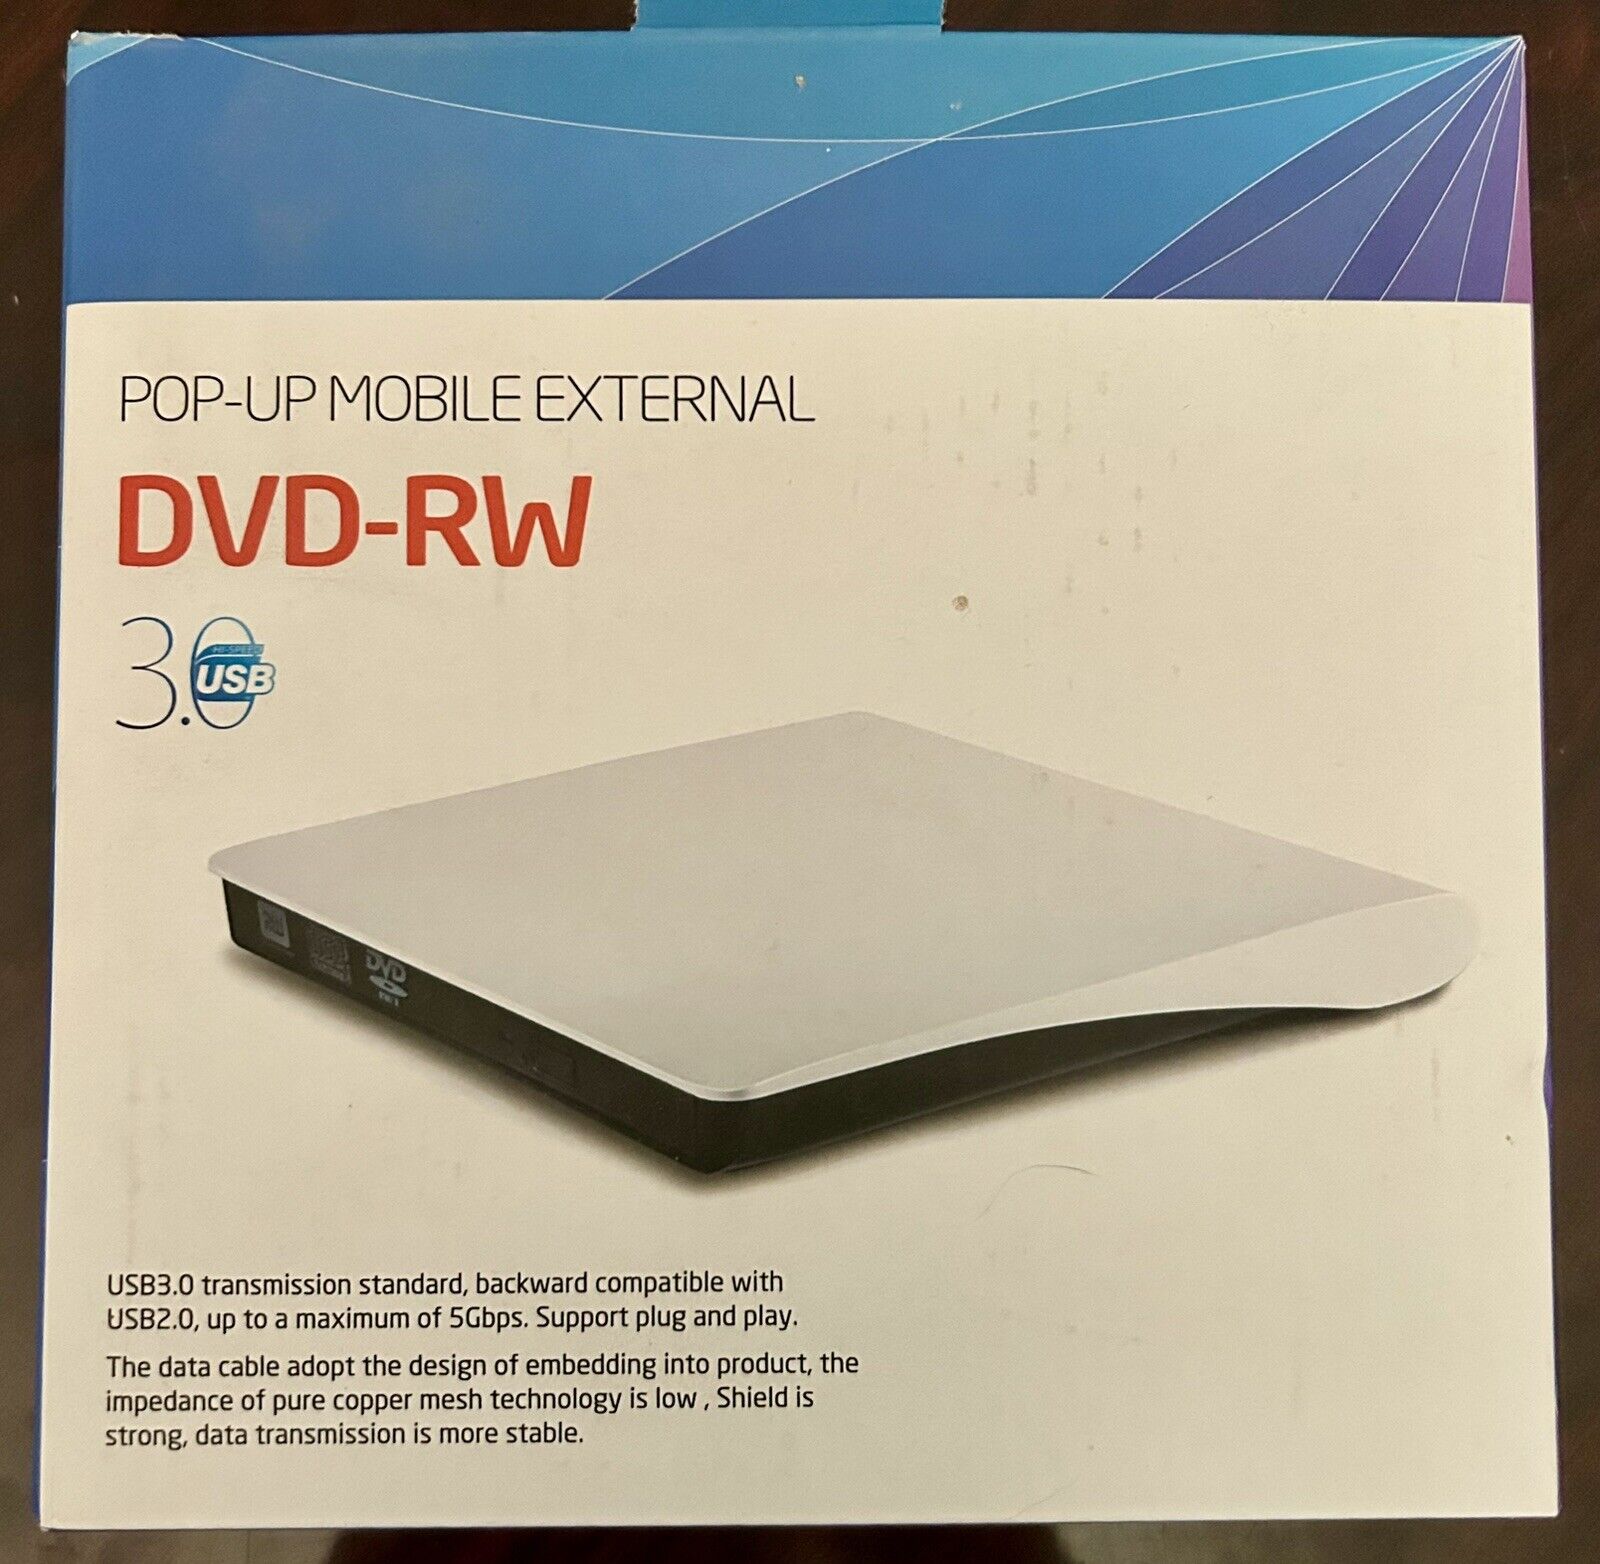 Pop-Up Mobile External DVD-RW USB 3.0 External ODD & HDD Device ECD819-SU3-black